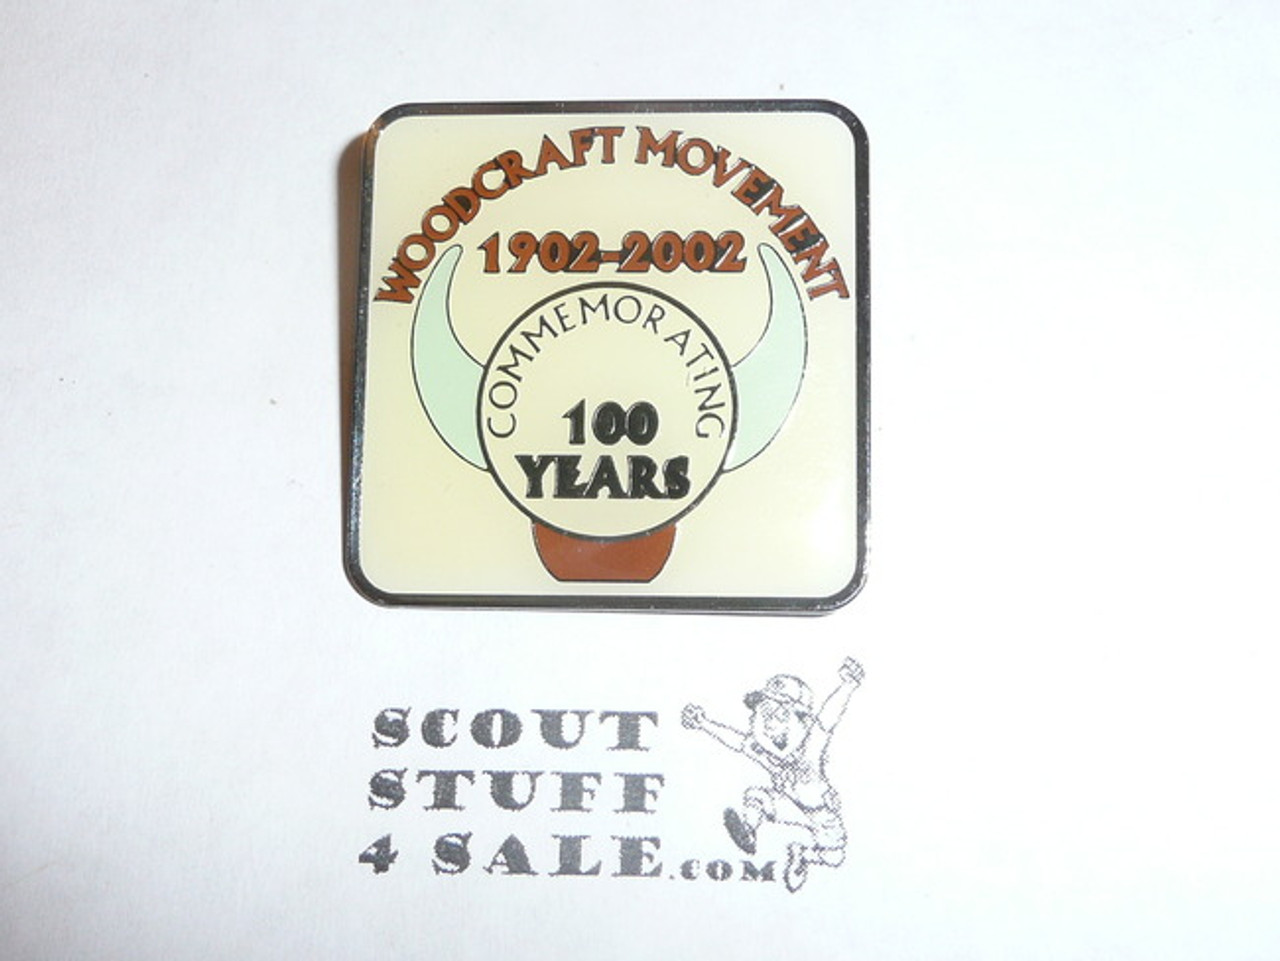 Woodcraft Rangers 100th Anniversary Pin, 2002